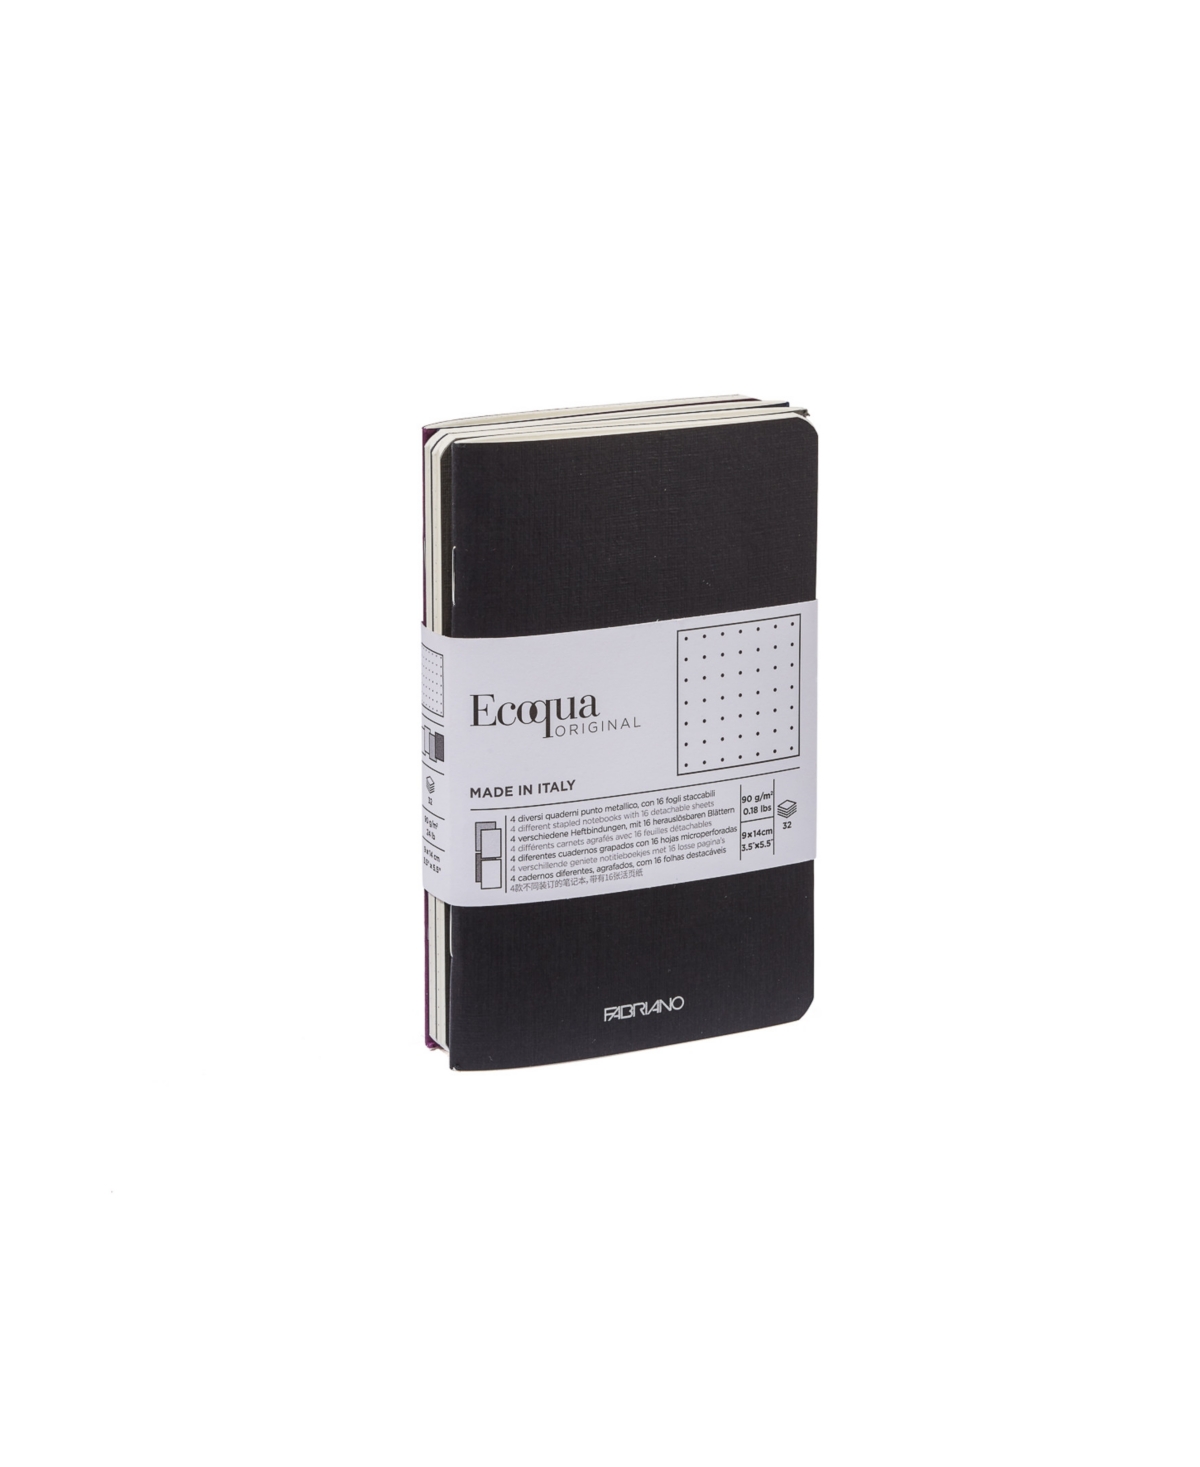 Winter Colors Ecoqua Pocket Sized Dot Staple Bound Notebook 4 Piece Pack - Multi